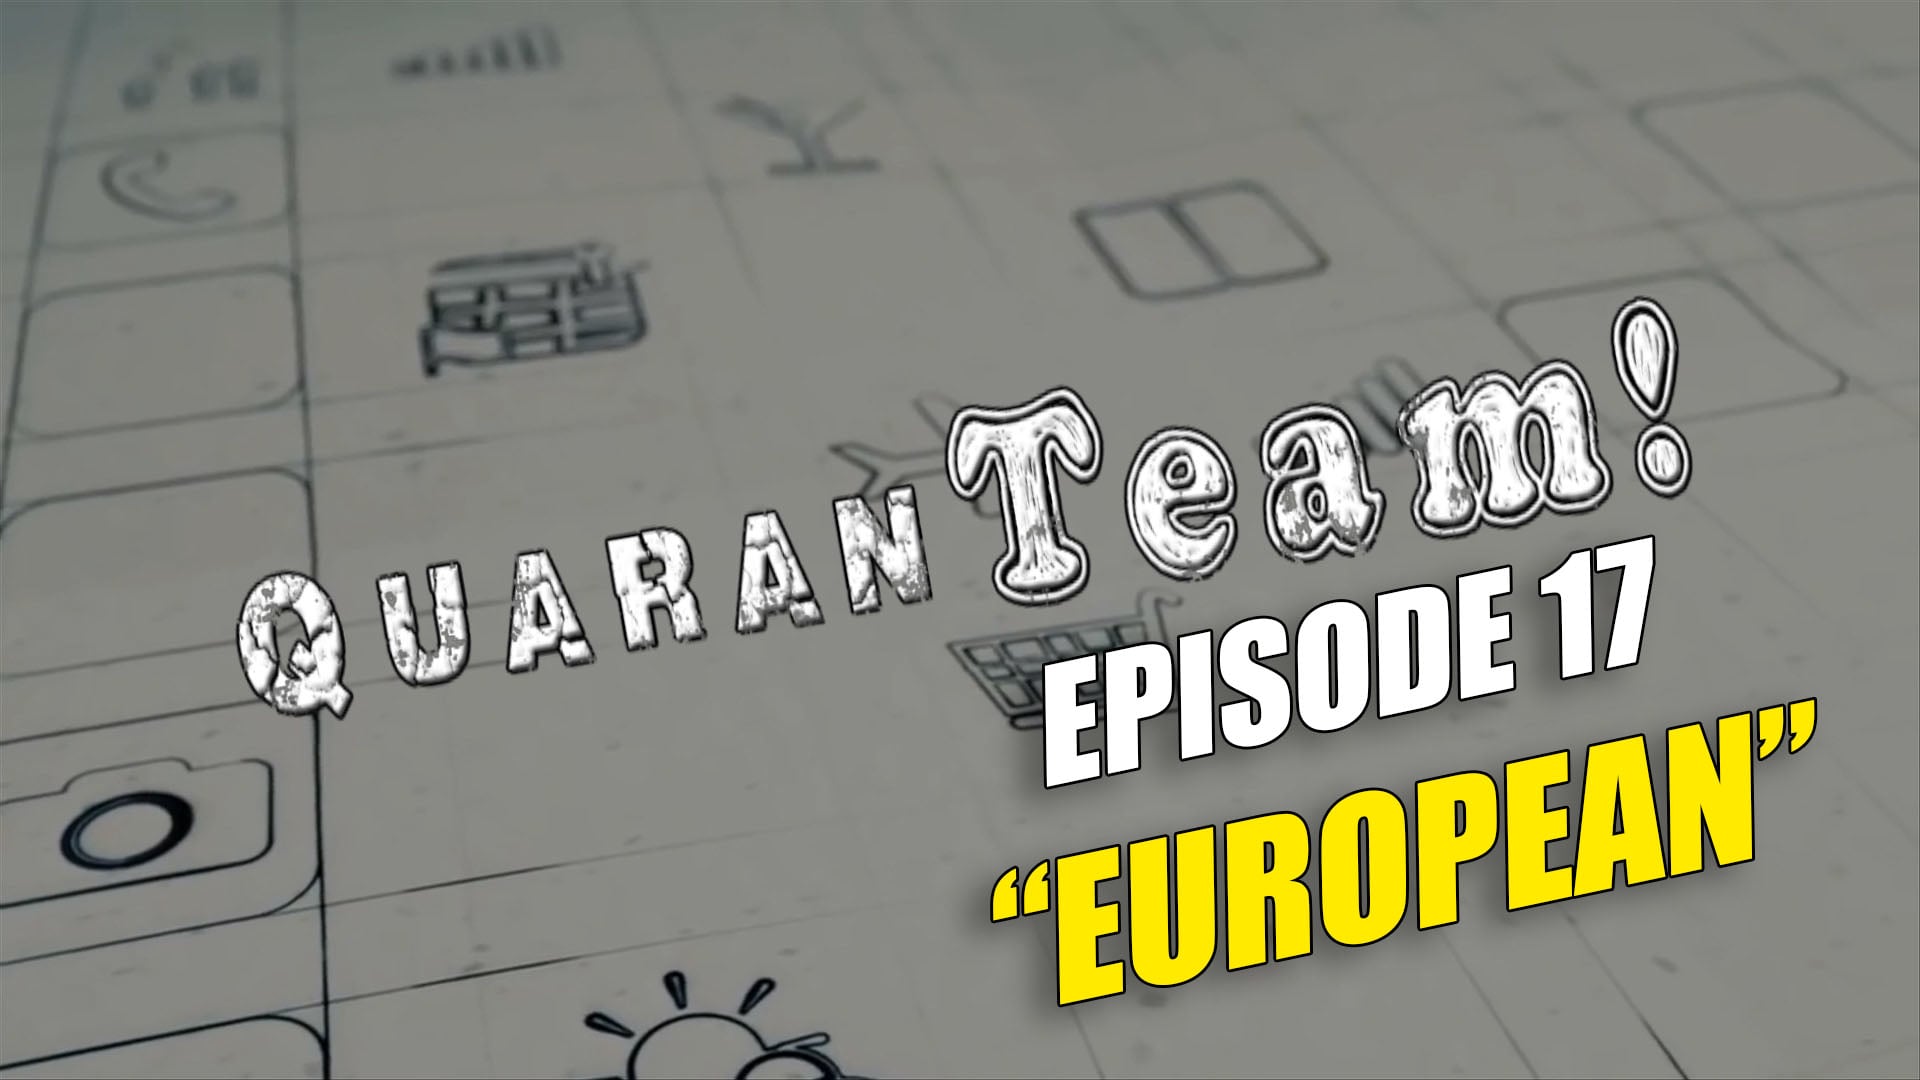 Watch QuaranTEAM! S1E17: European on our Free Roku Channel